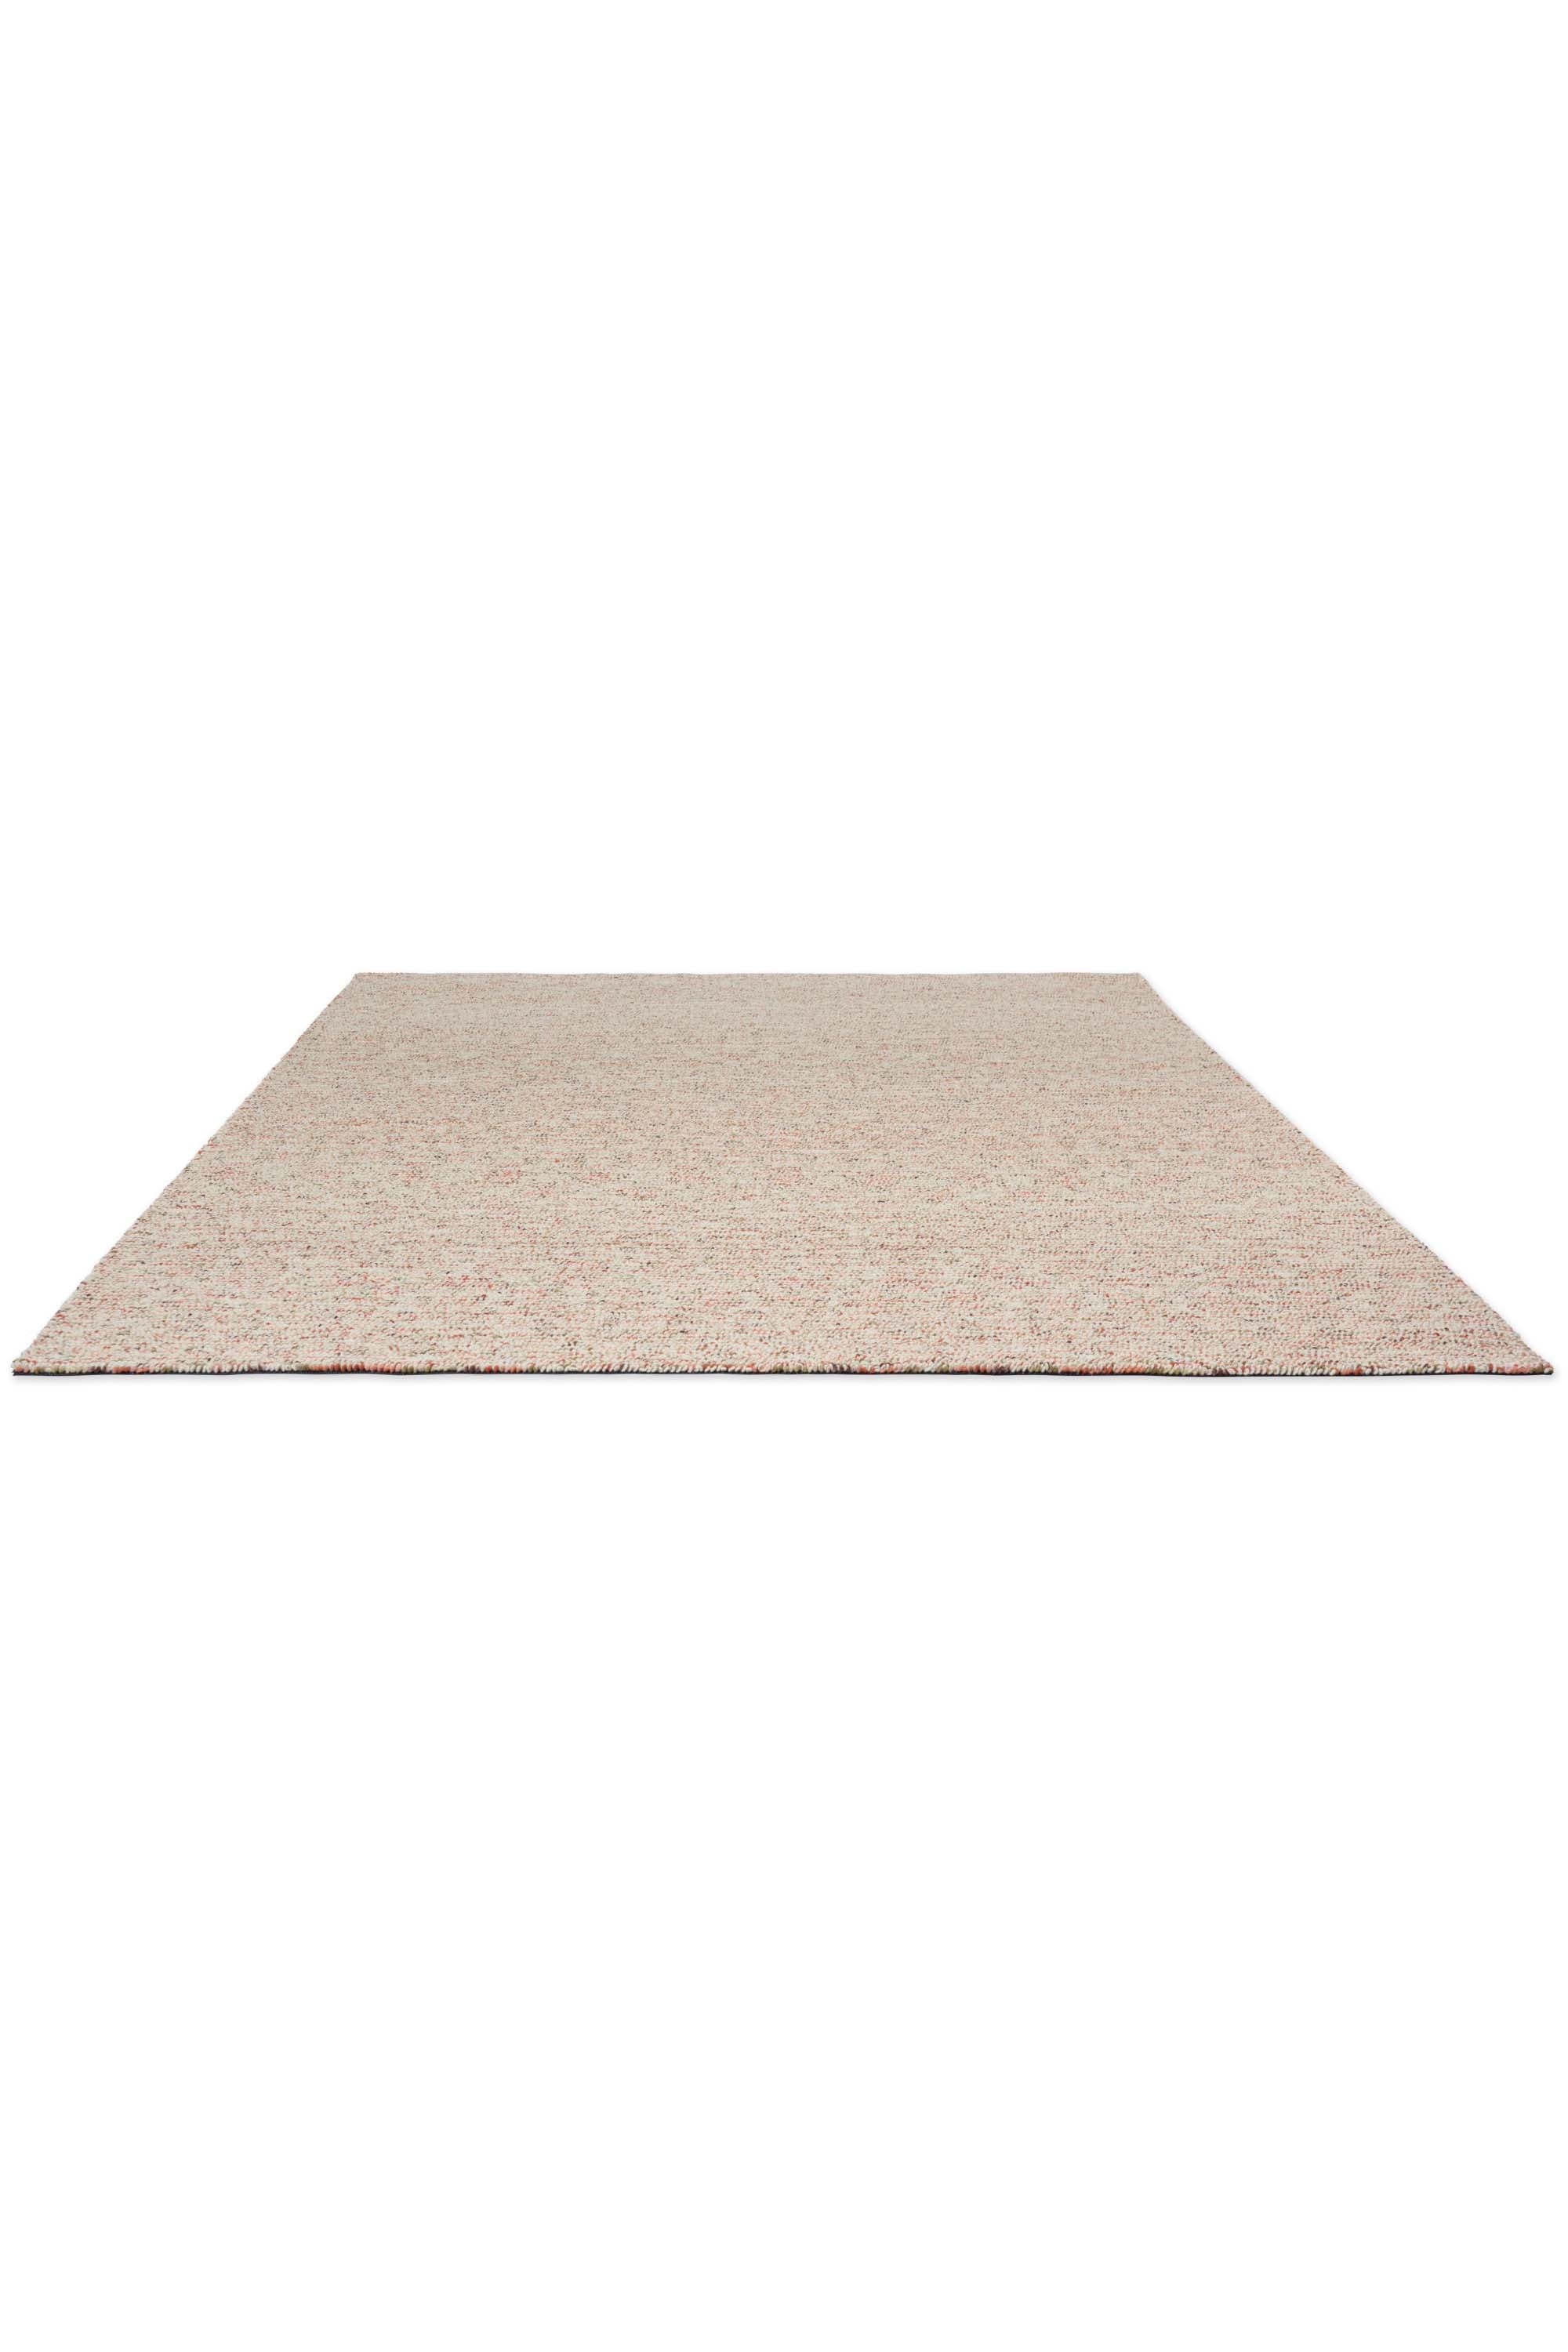 Plain flatweave rug with cream and multicolour pile